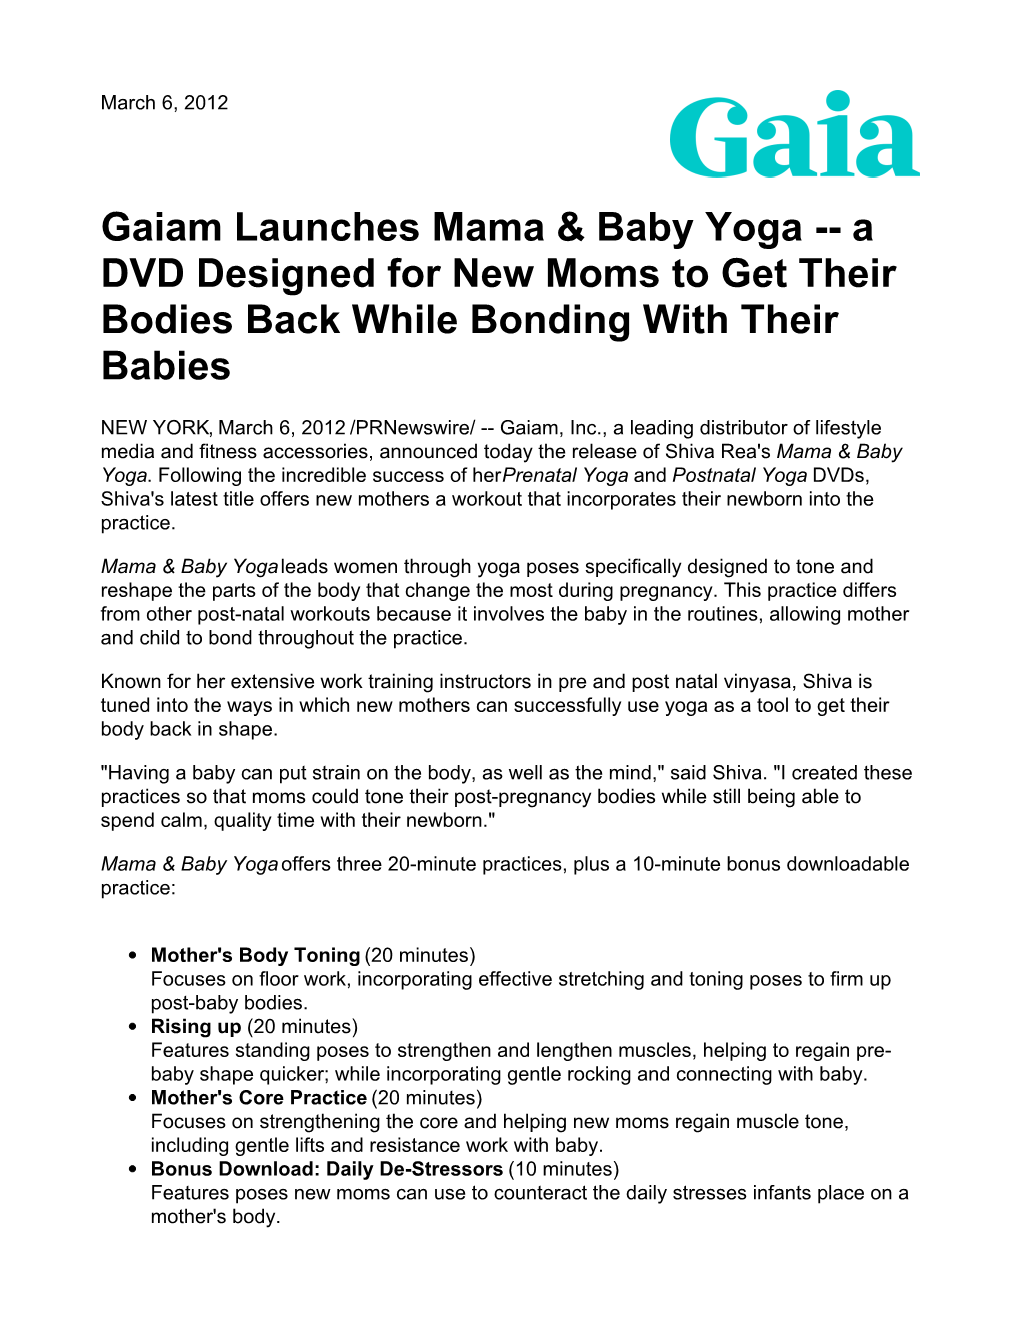 Gaiam Launches Mama & Baby Yoga